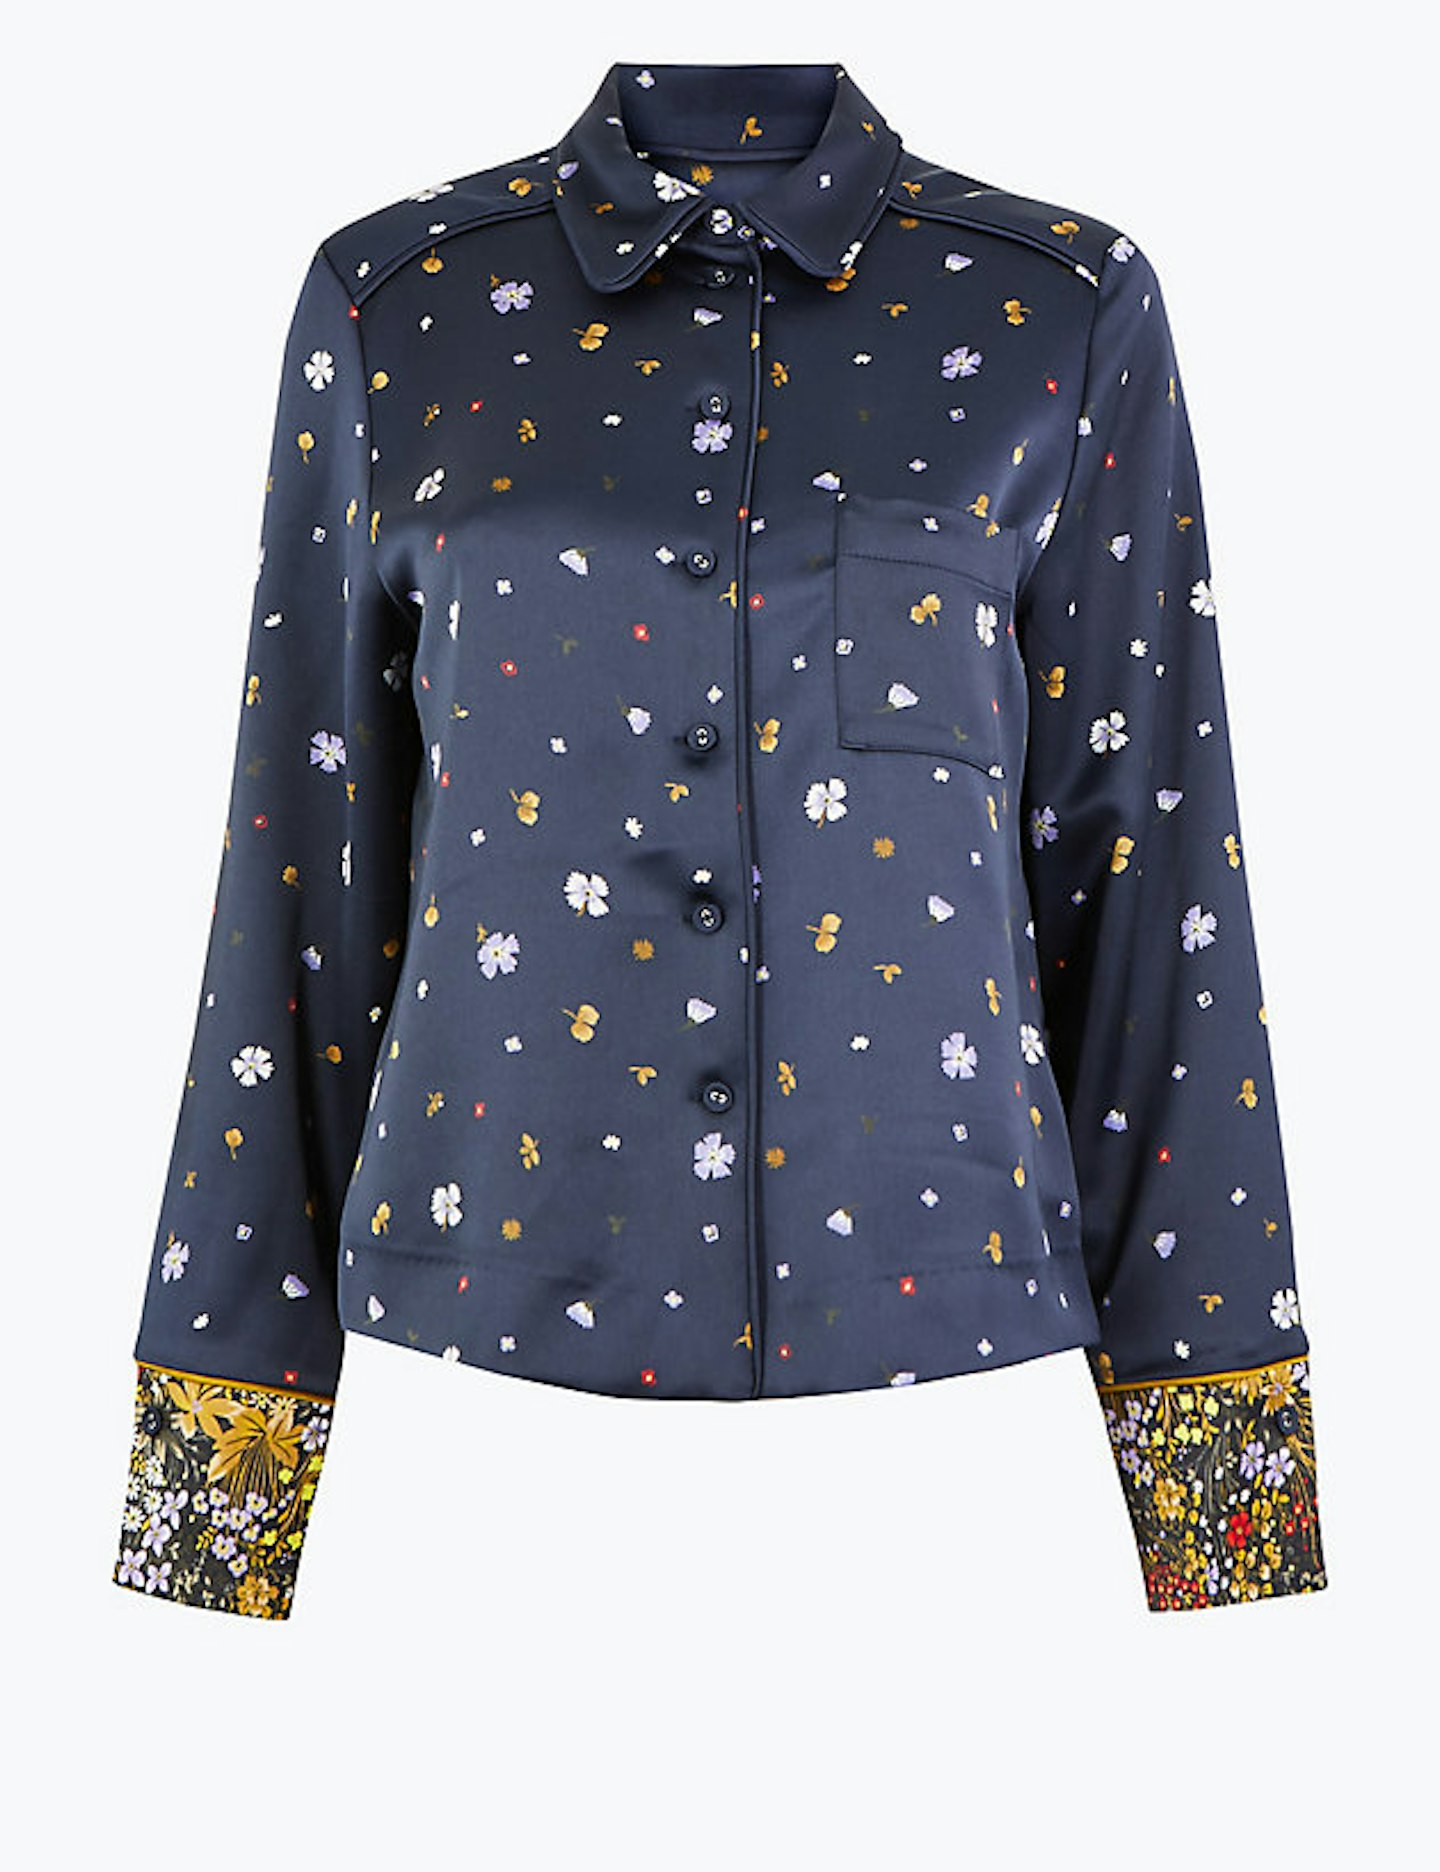 Floral Pyjama Style Blouse, £39.50